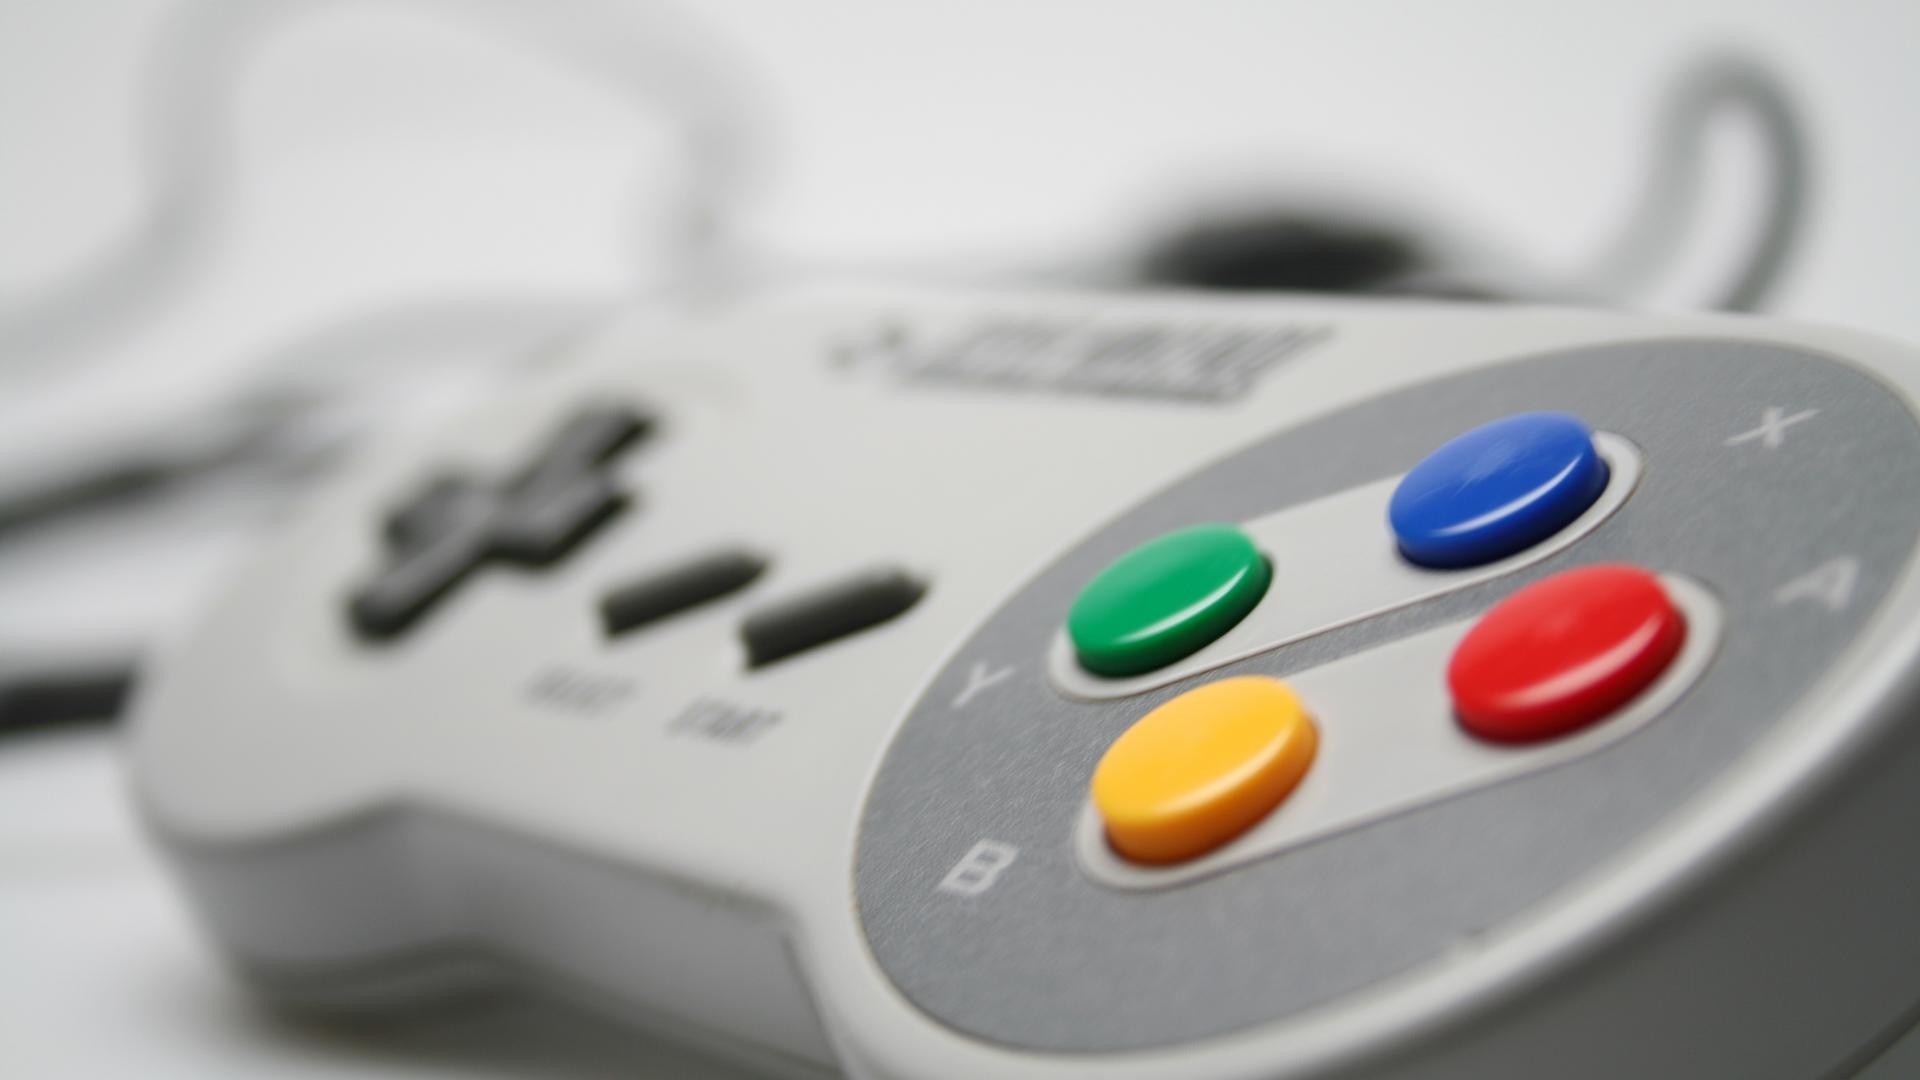 General 1920x1080 controllers Nintendo SNES retro games video games buttons selective coloring macro